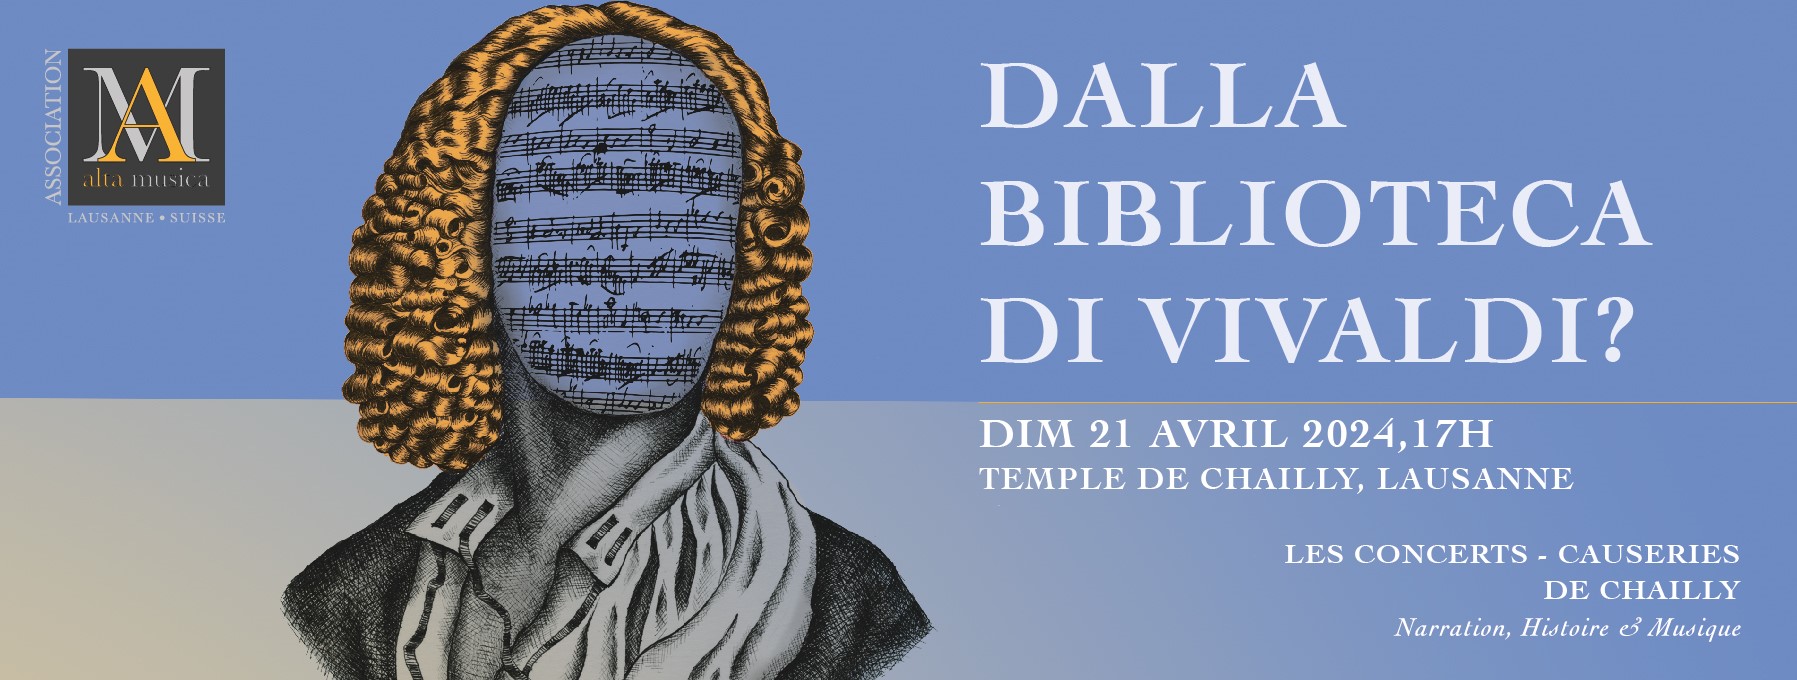 Complément au programme du Concert-Causerie « Dalla biblioteca di Vivaldi? »